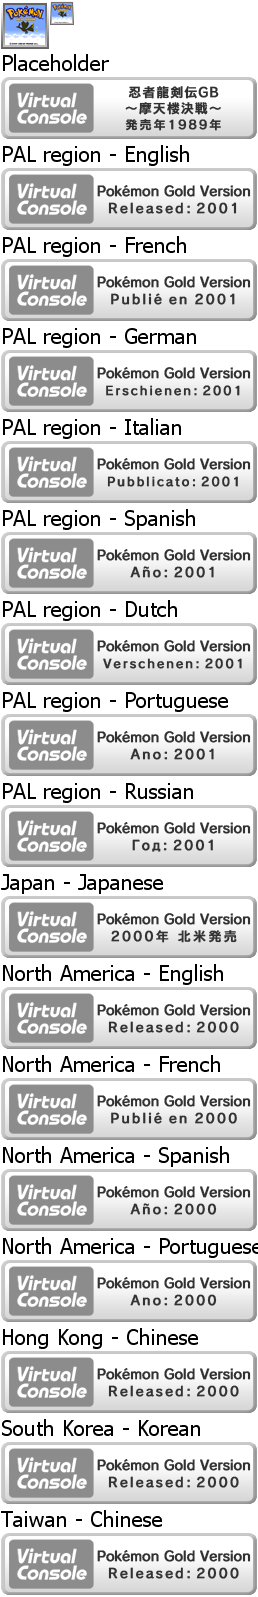 Virtual Console - Pokémon Gold Version